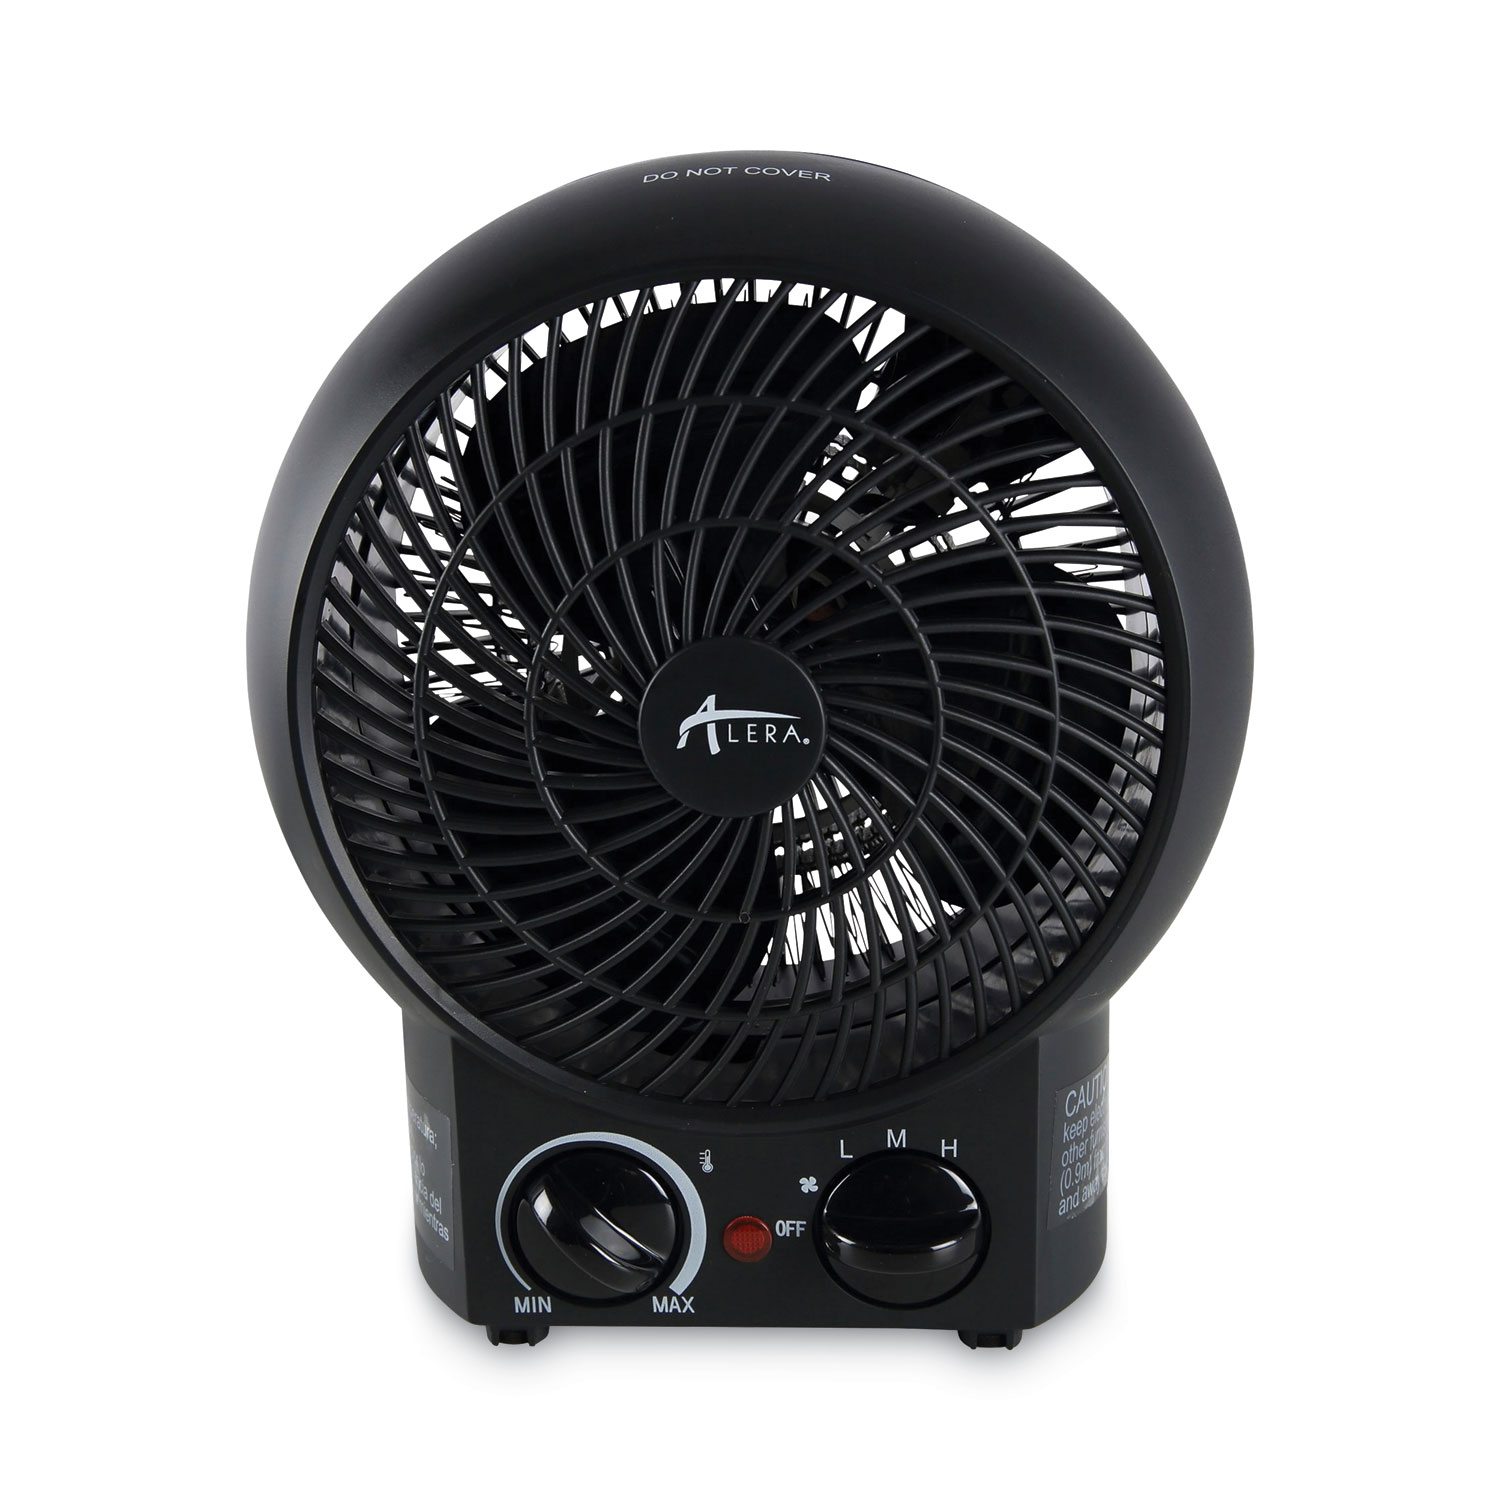 Alera Heater Fan, 8.25" X 4.38" X 9.38", Black